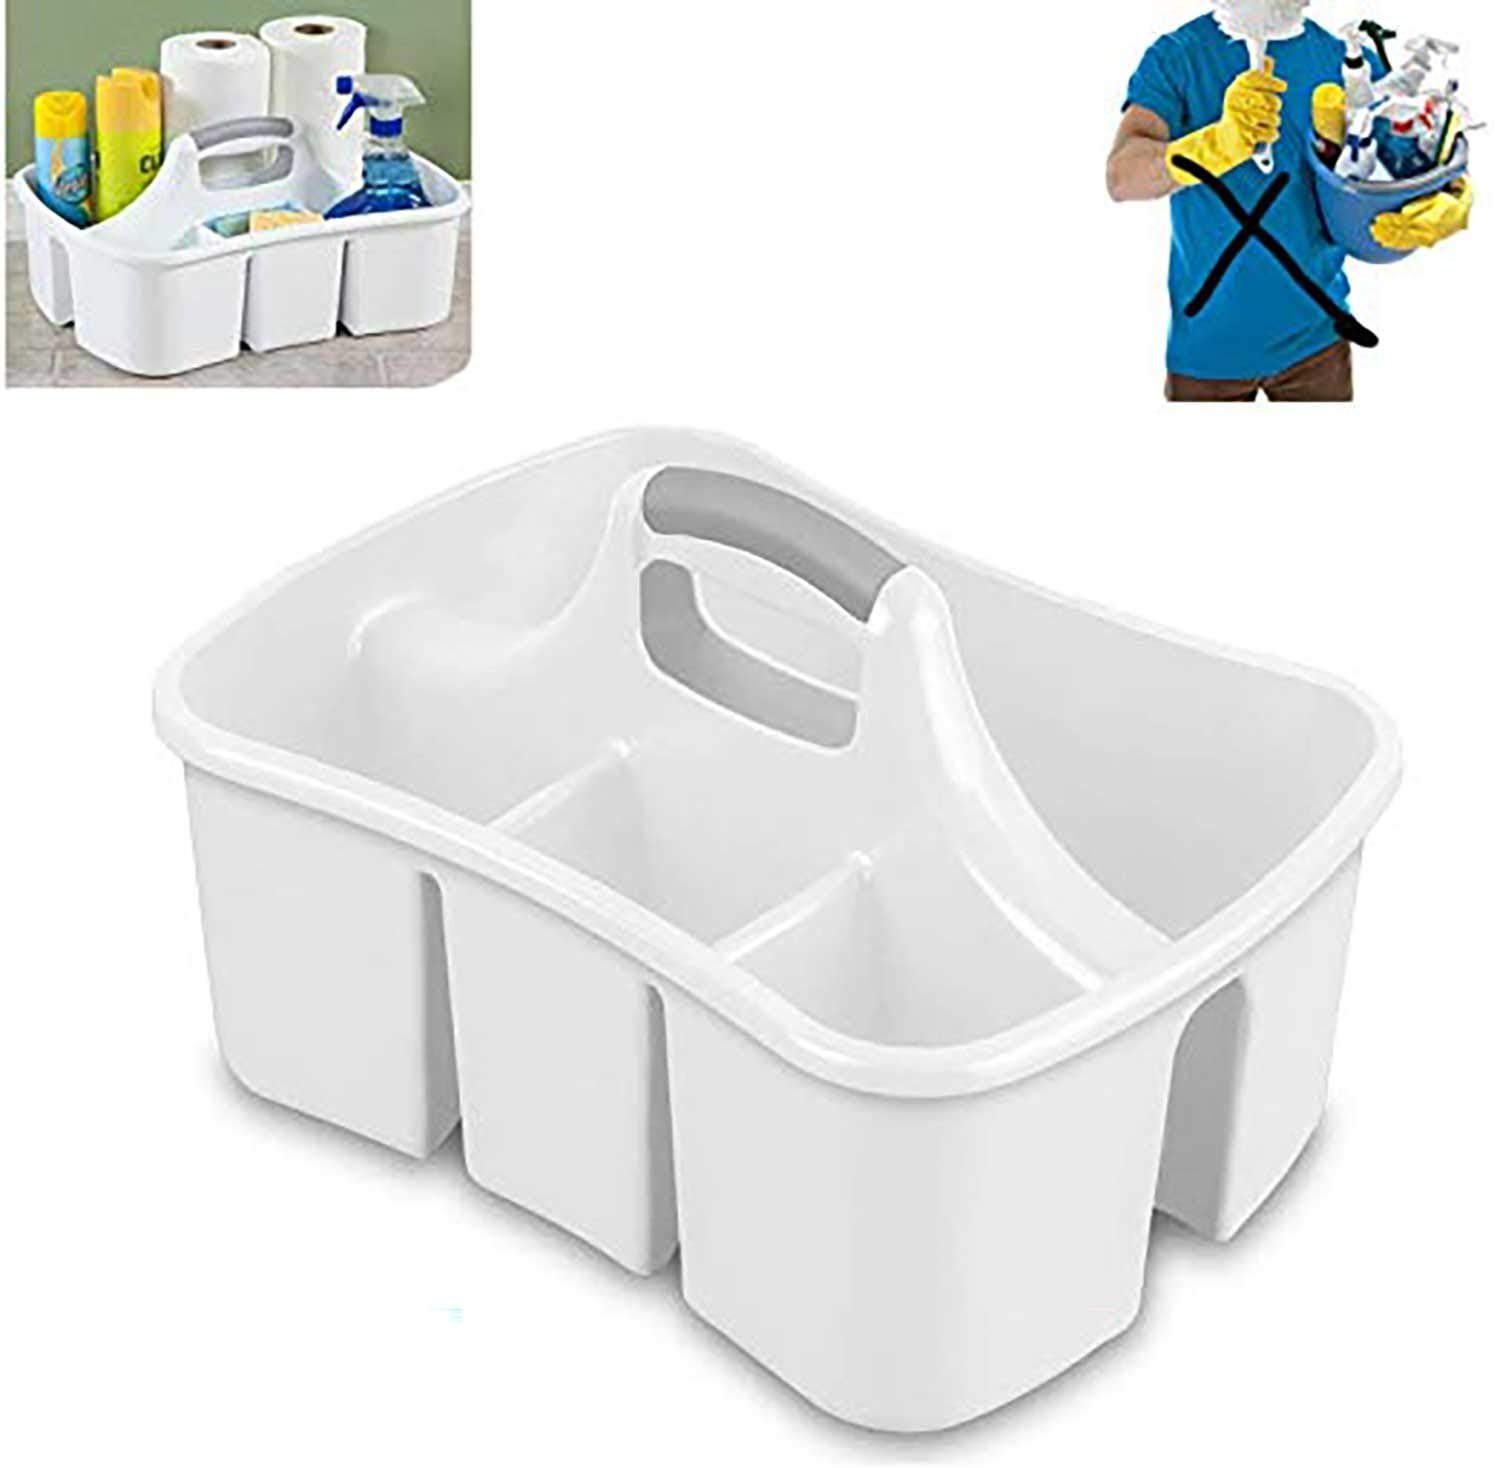 XL Bath Kitchen Divided Compartment Caddy Storage Sink Organizer Janitors Bucket Soap Cleaning Brush Sponge Bottle Holder Shower Basket Supplies